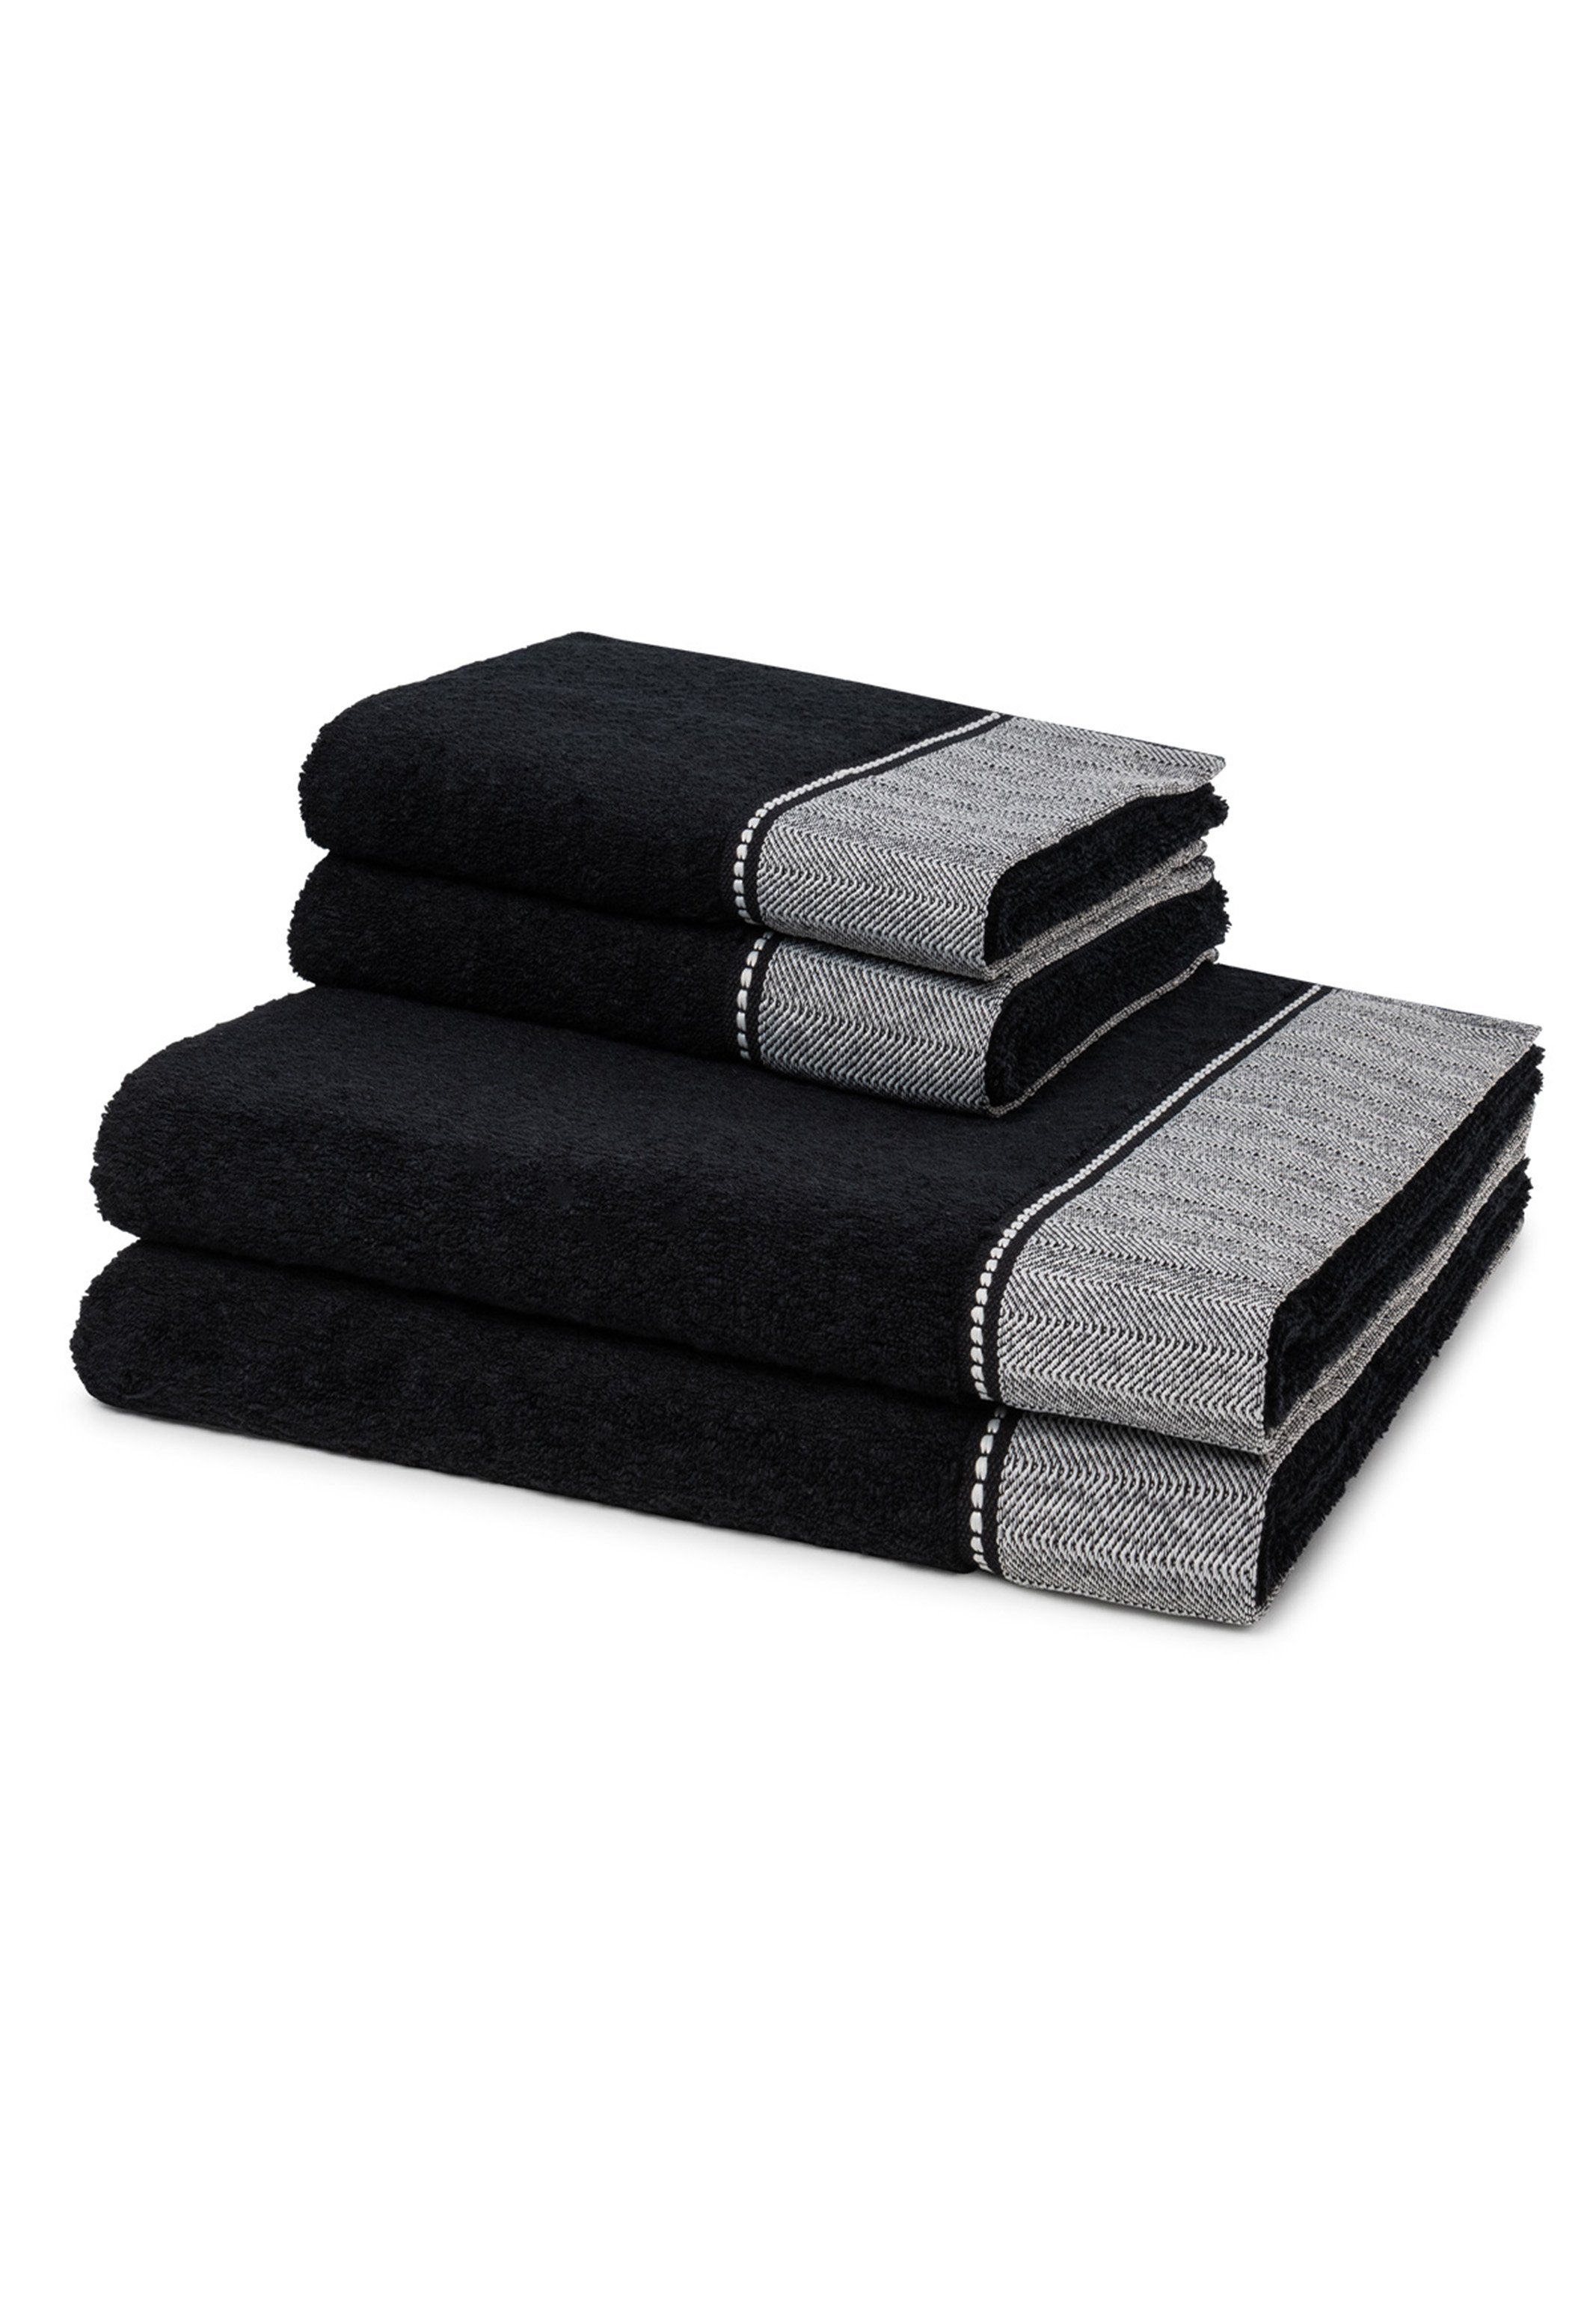 Möve Handtuch Set Brooklyn, Baumwolle, (Spar-Set, 4-tlg), 2 X Handtuch 2 X Duschtuch - im Set - Baumwolle - Weicher Materialmix Black | Handtuch-Sets